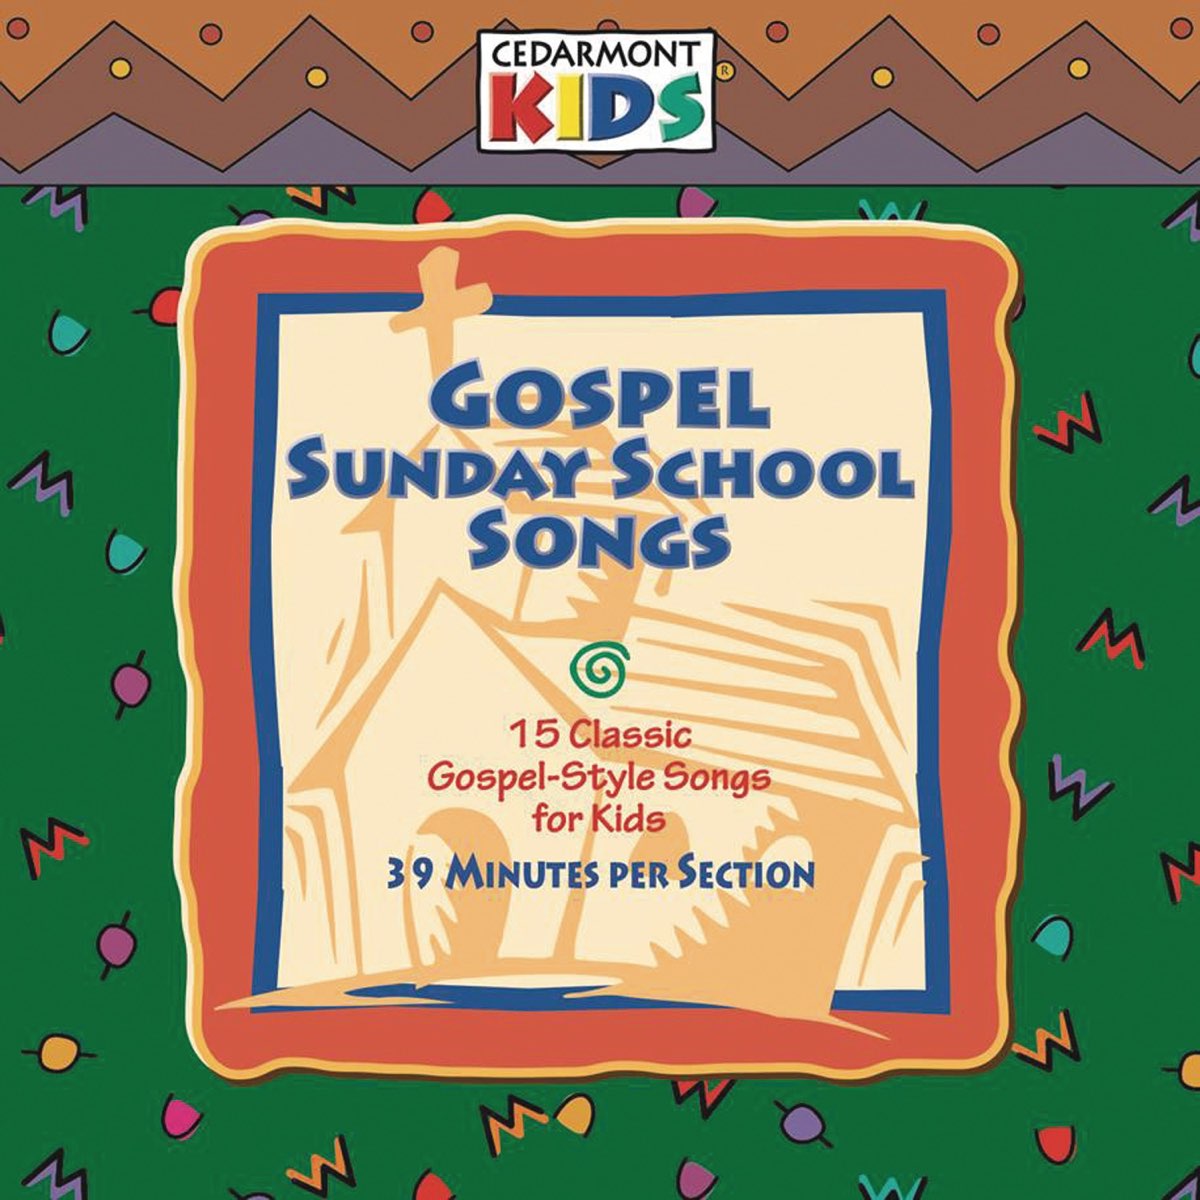 ‎Gospel Sunday School Songs by Cedarmont Kids on Apple Music